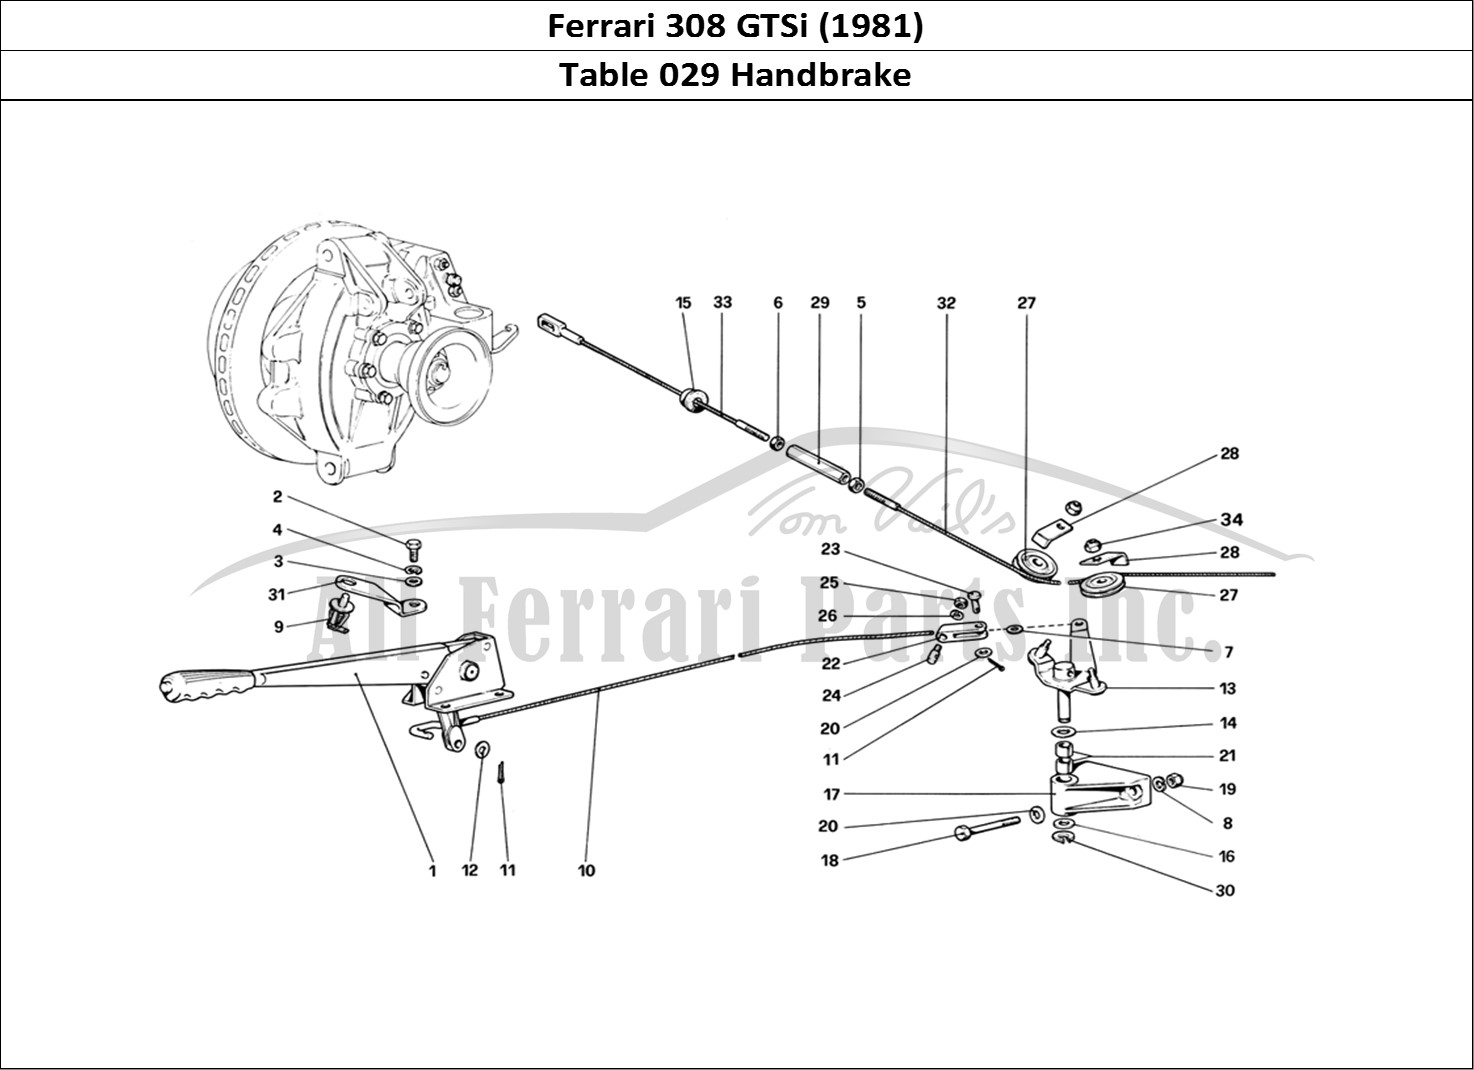 Ferrari Parts Ferrari 308 GTBi (1981) Page 029 Hand-Brake Control